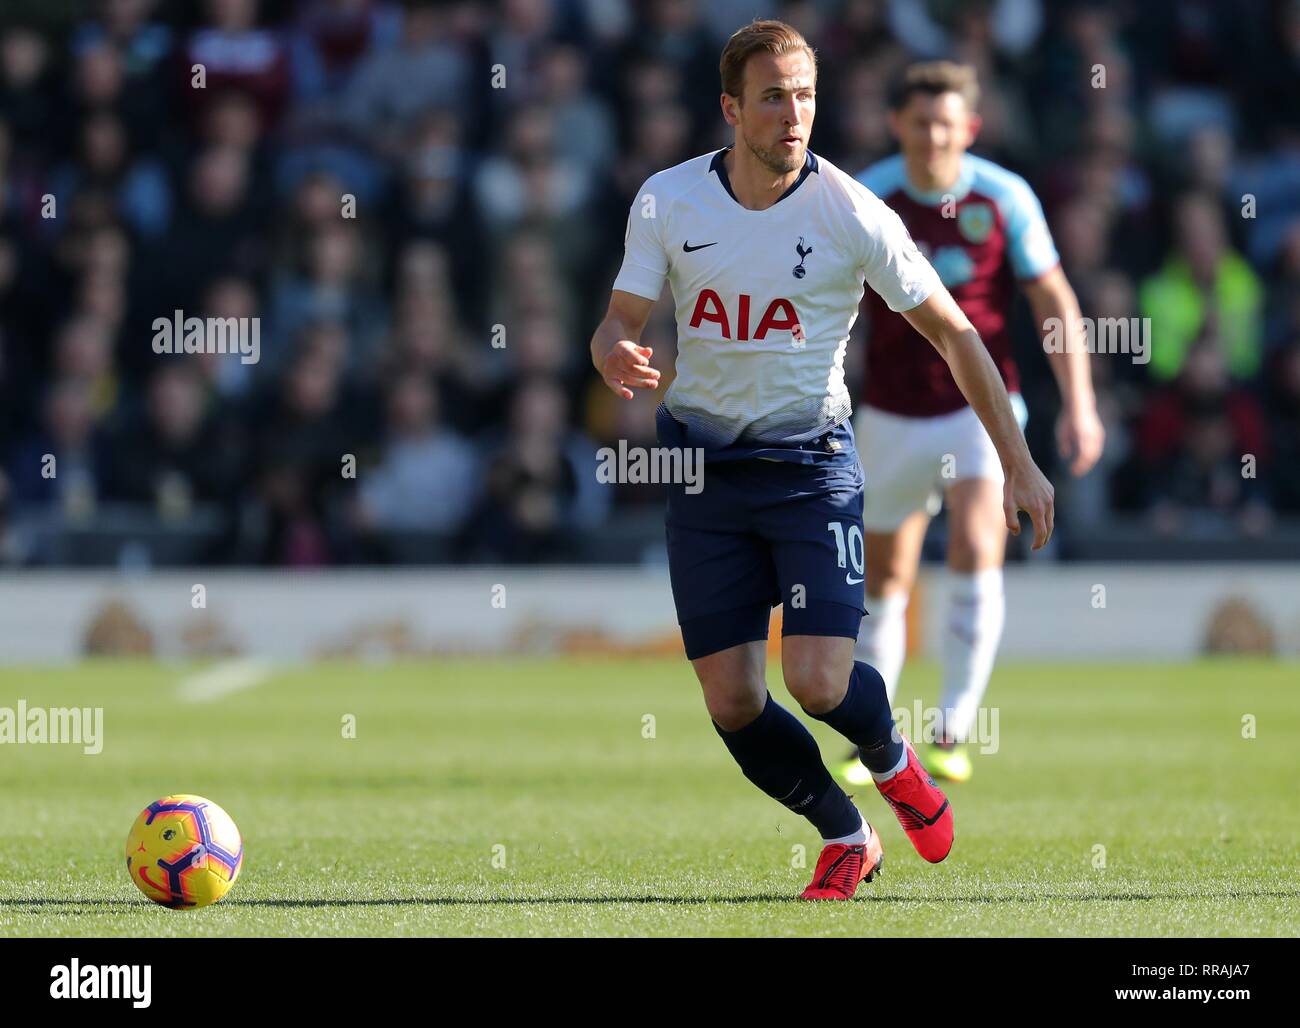 HARRY KANE, Tottenham Hotspur FC Burnley FC V Tottenham Hotspur FC, PREMIER LEAGU, 2019 Stockfoto